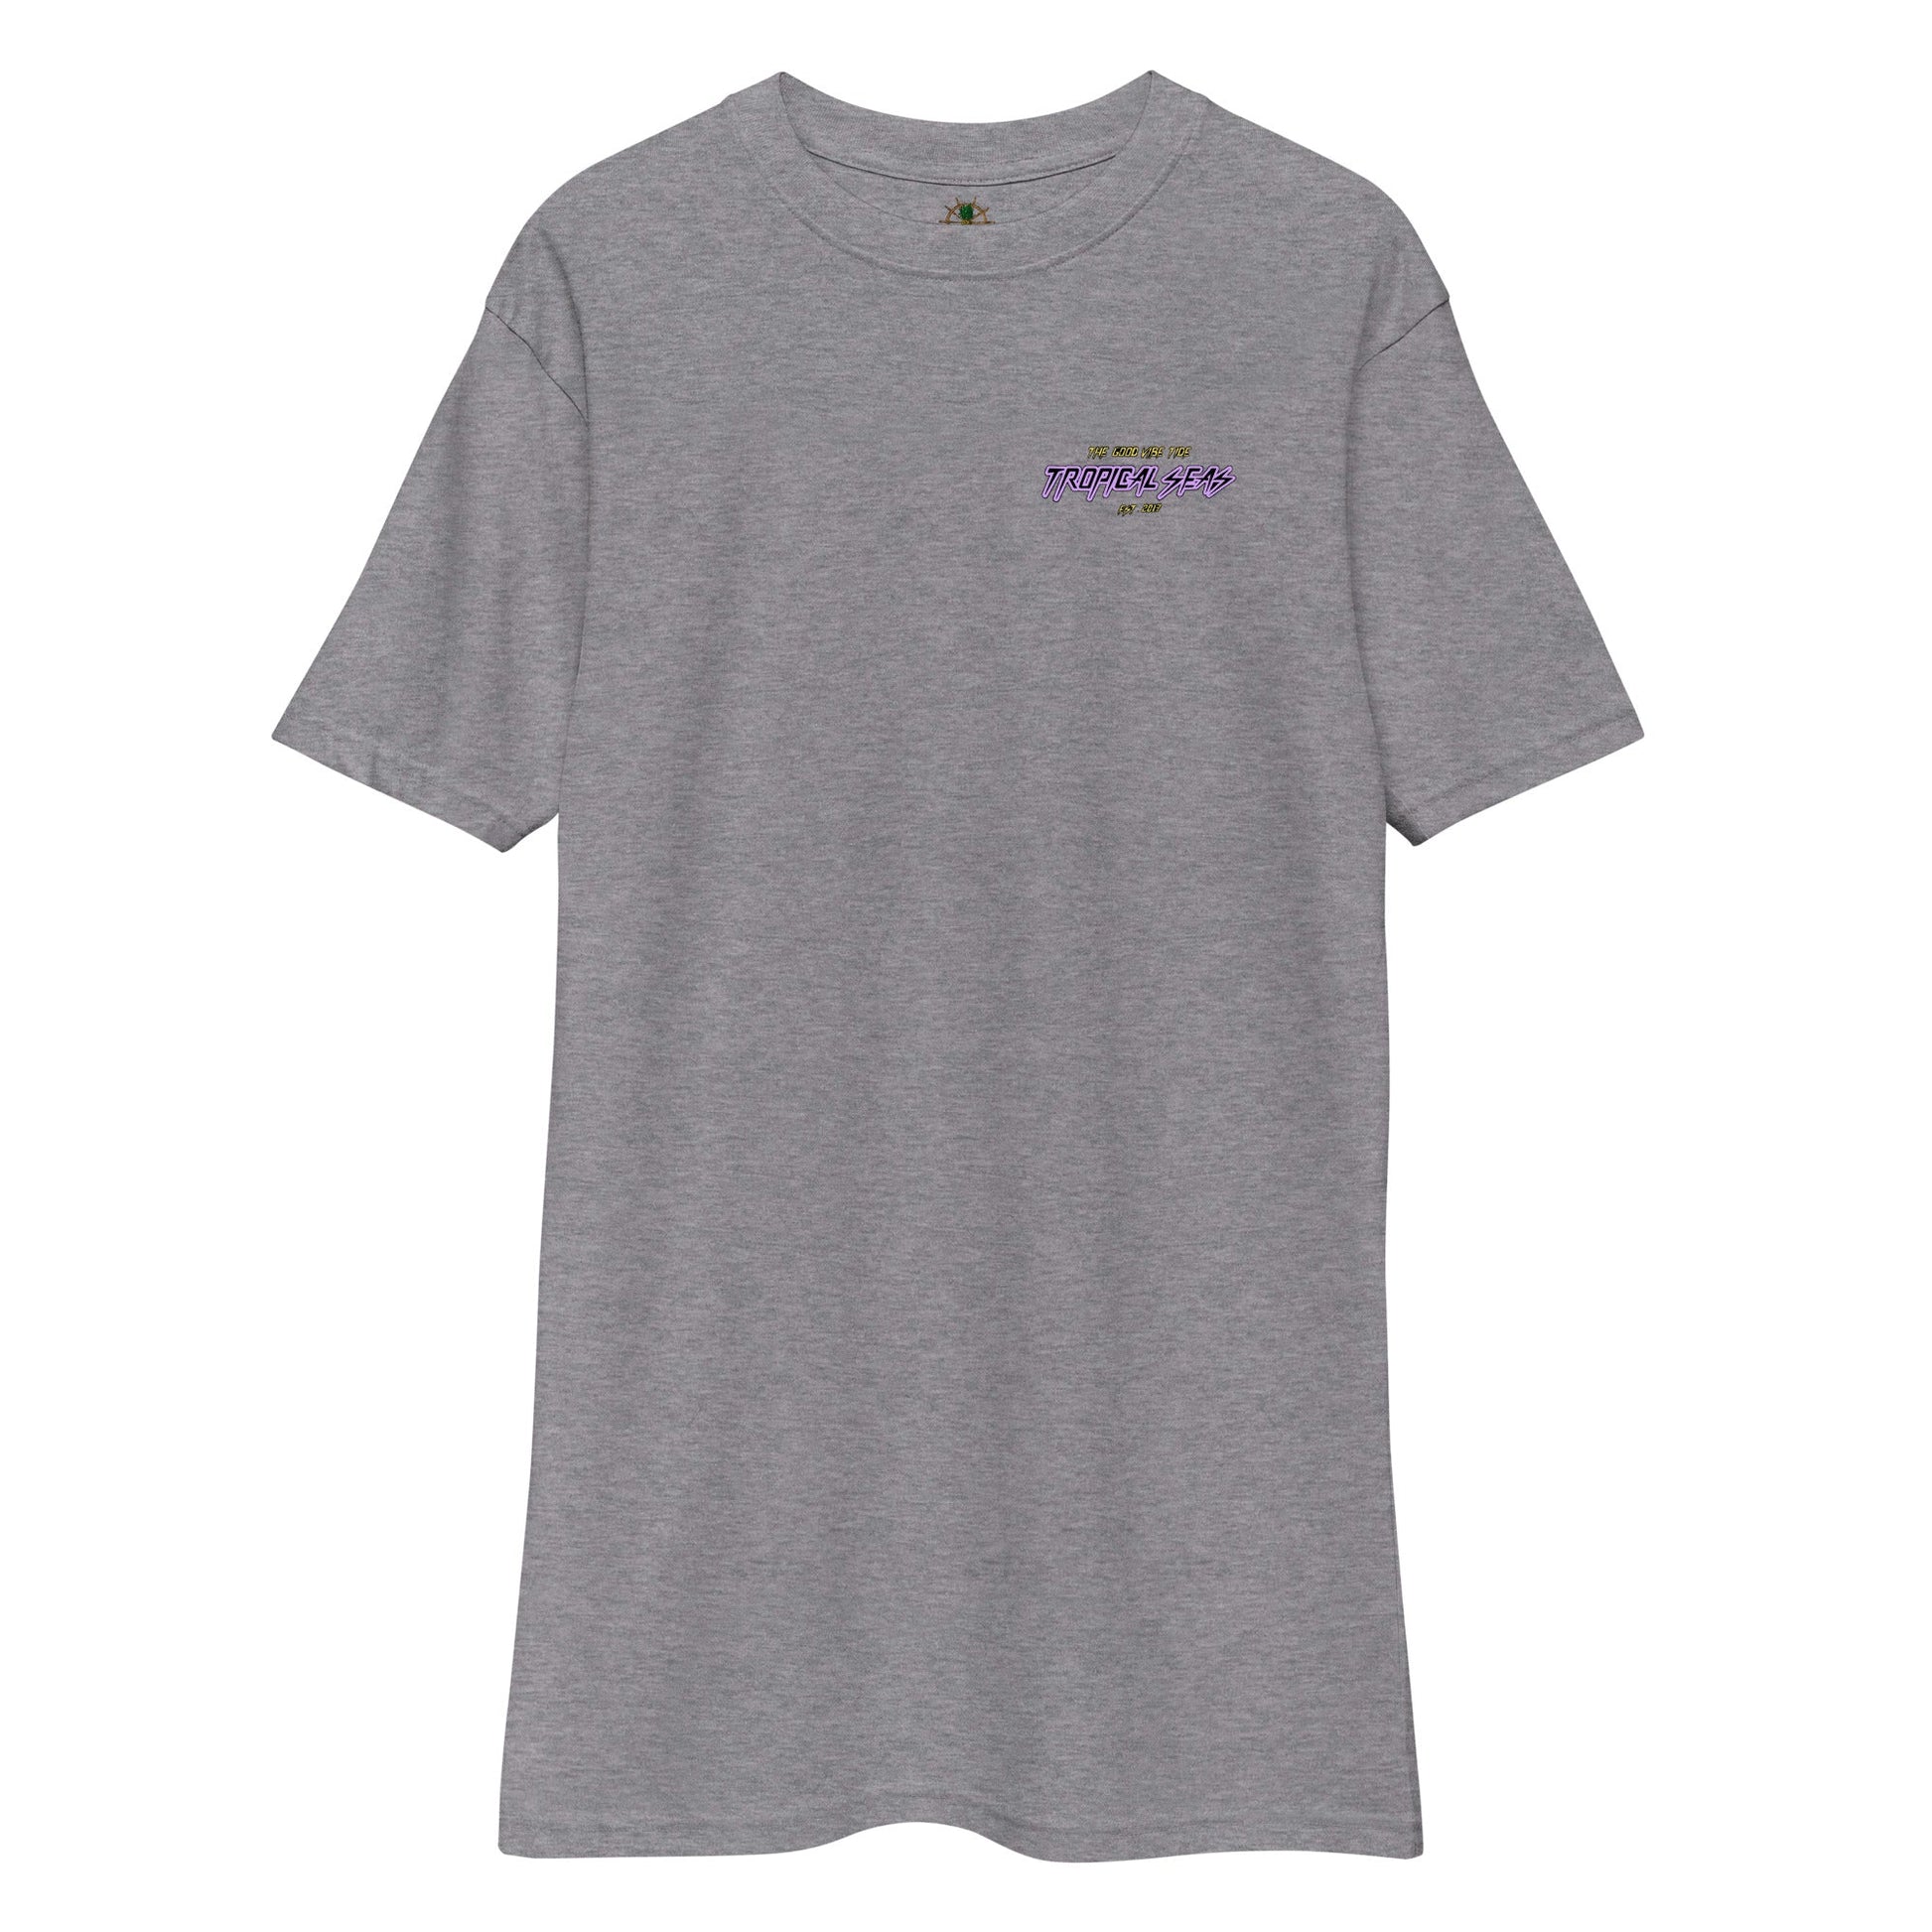 Men's Premium Tropical Neon Ride Shark T-shirt - Tropical Seas Clothing 